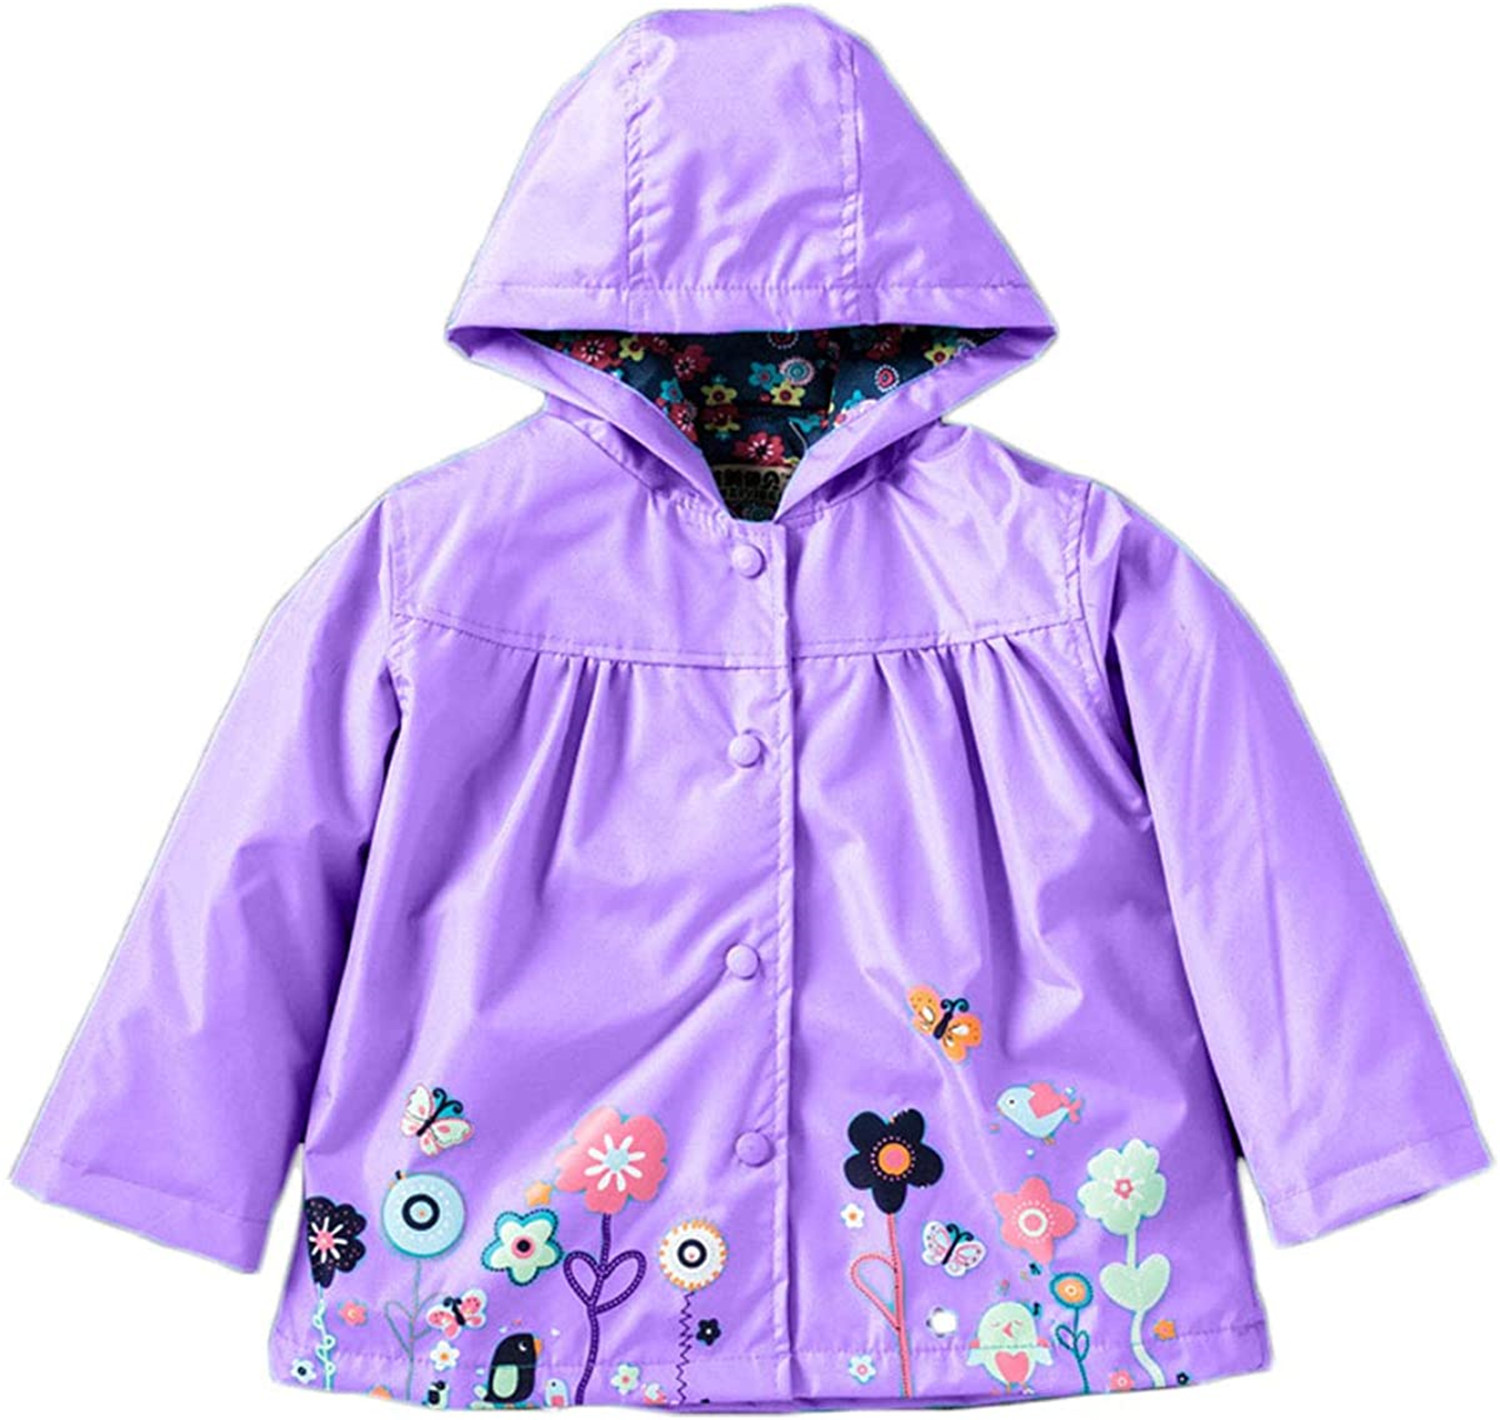 Kiapeise Kids Children Girl Flowers Hooded Waterproof Windproof Raincoat Jacket Outwear - image 1 of 4